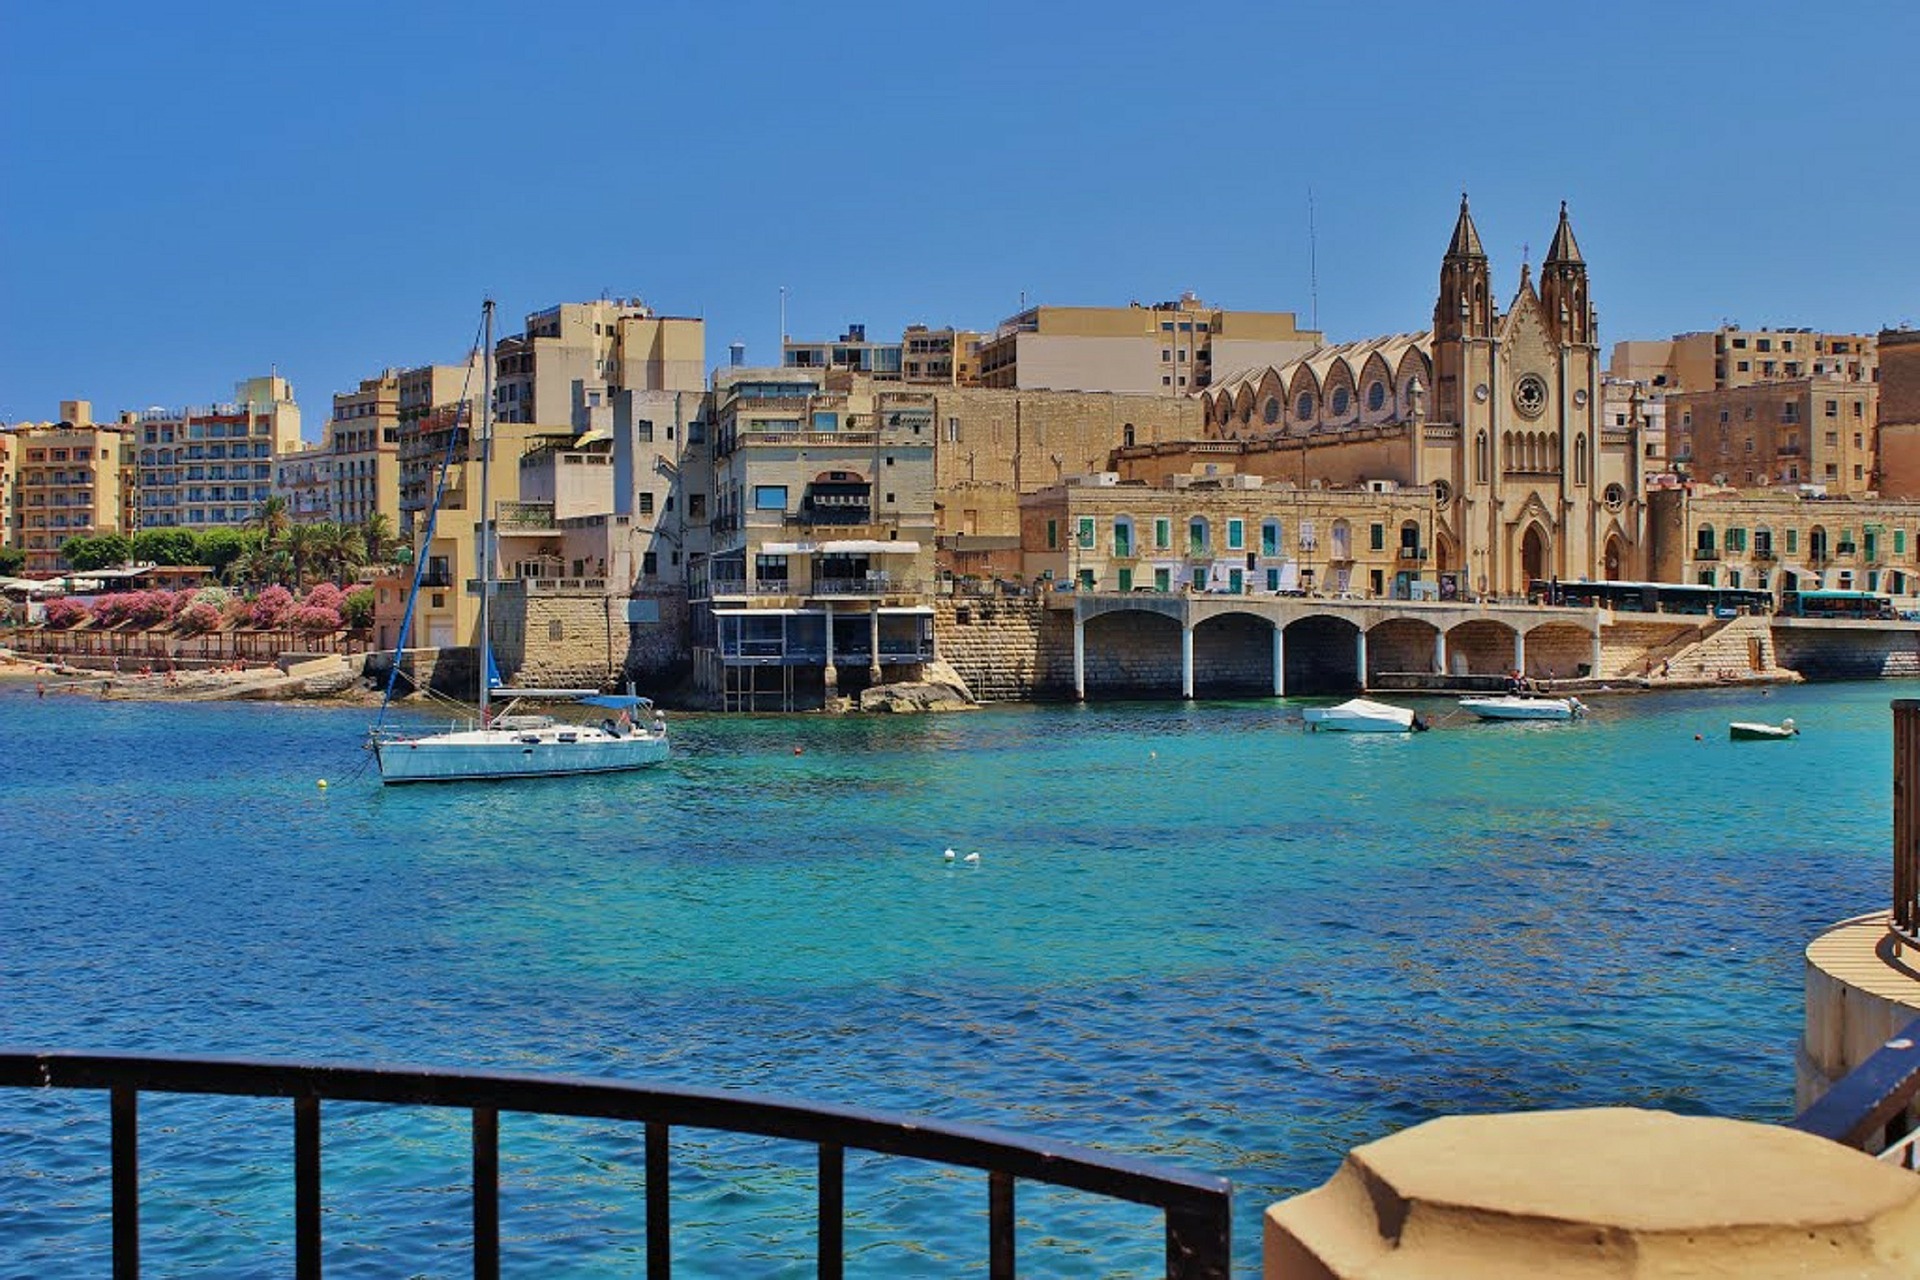 Valeta, Malta